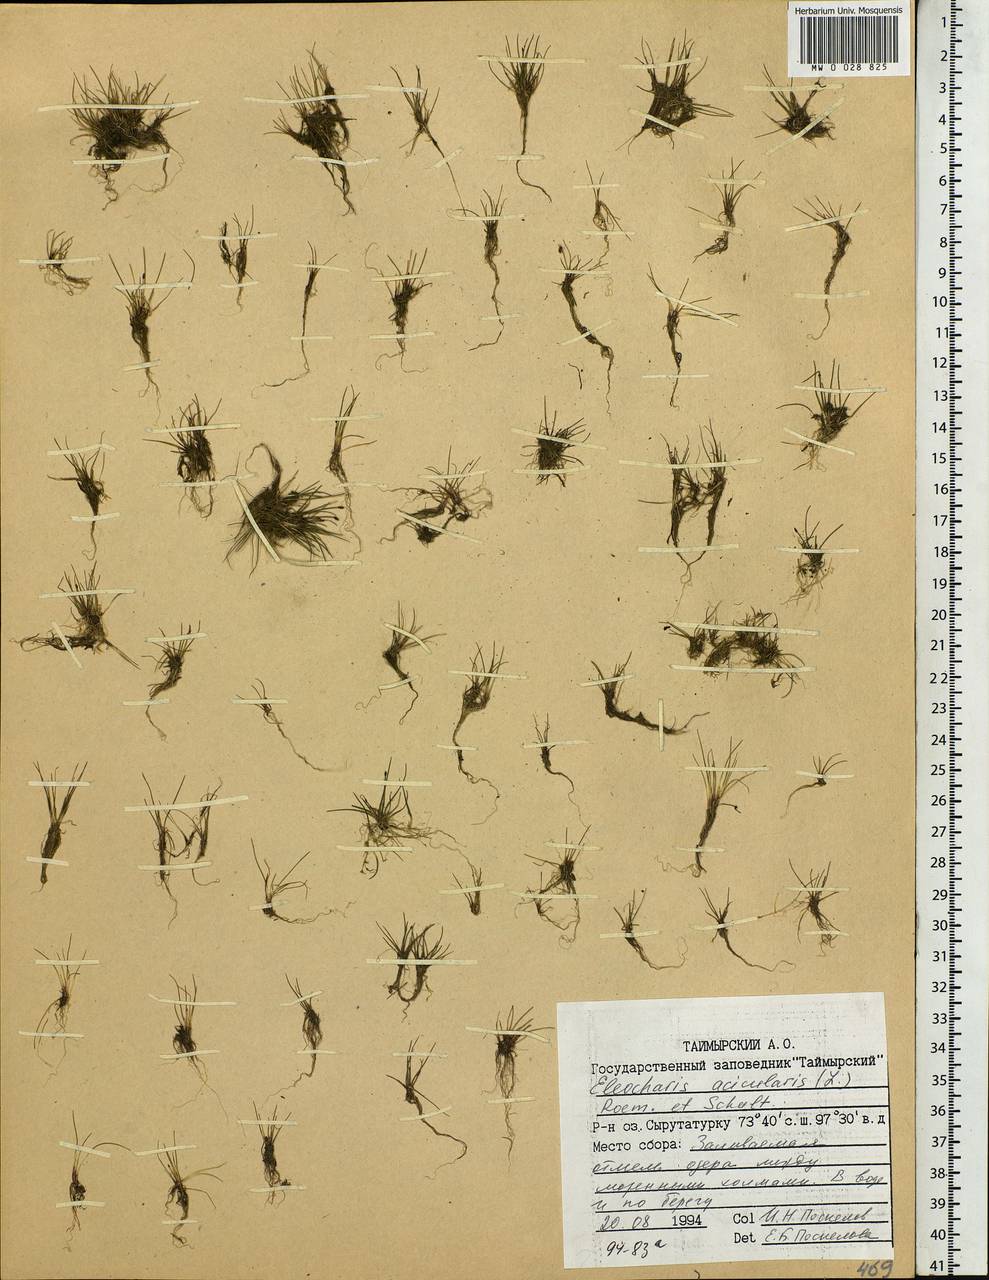 Eleocharis acicularis (L.) Roem. & Schult., Siberia, Central Siberia (S3) (Russia)